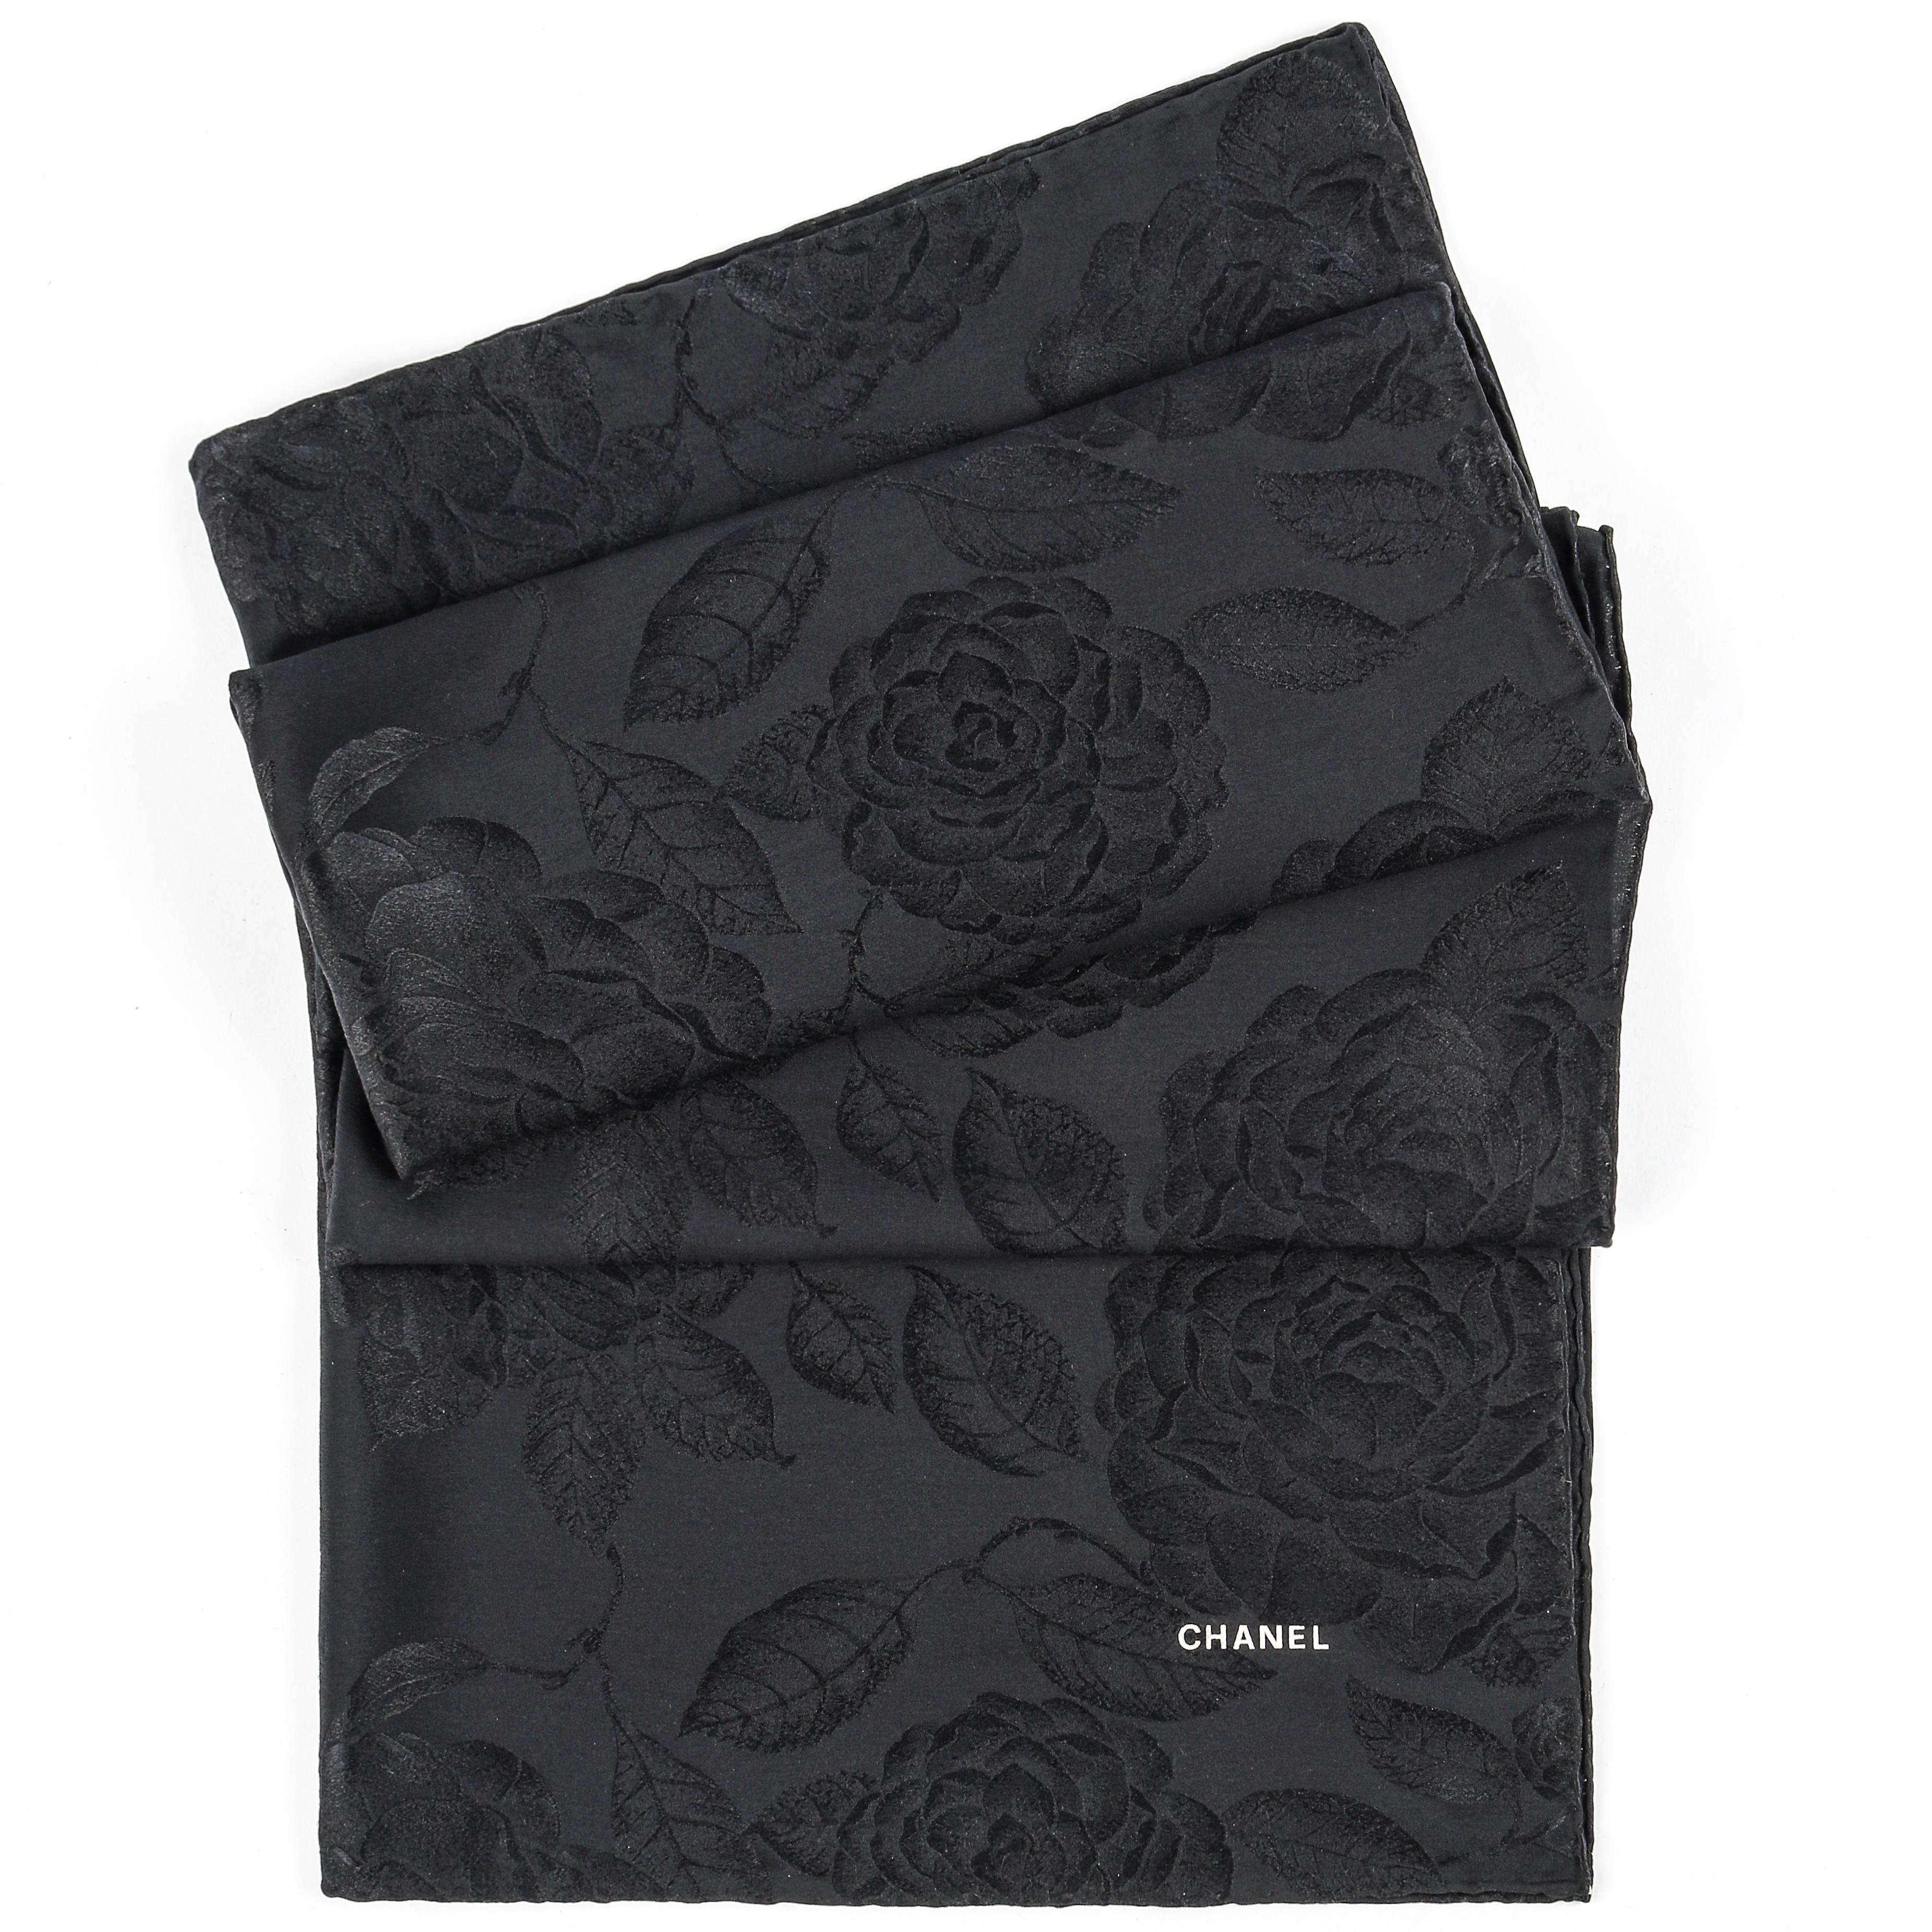 CHANEL Black Satin Camellia Print 100% Silk Large Scarf Wrap Shawl With Box 